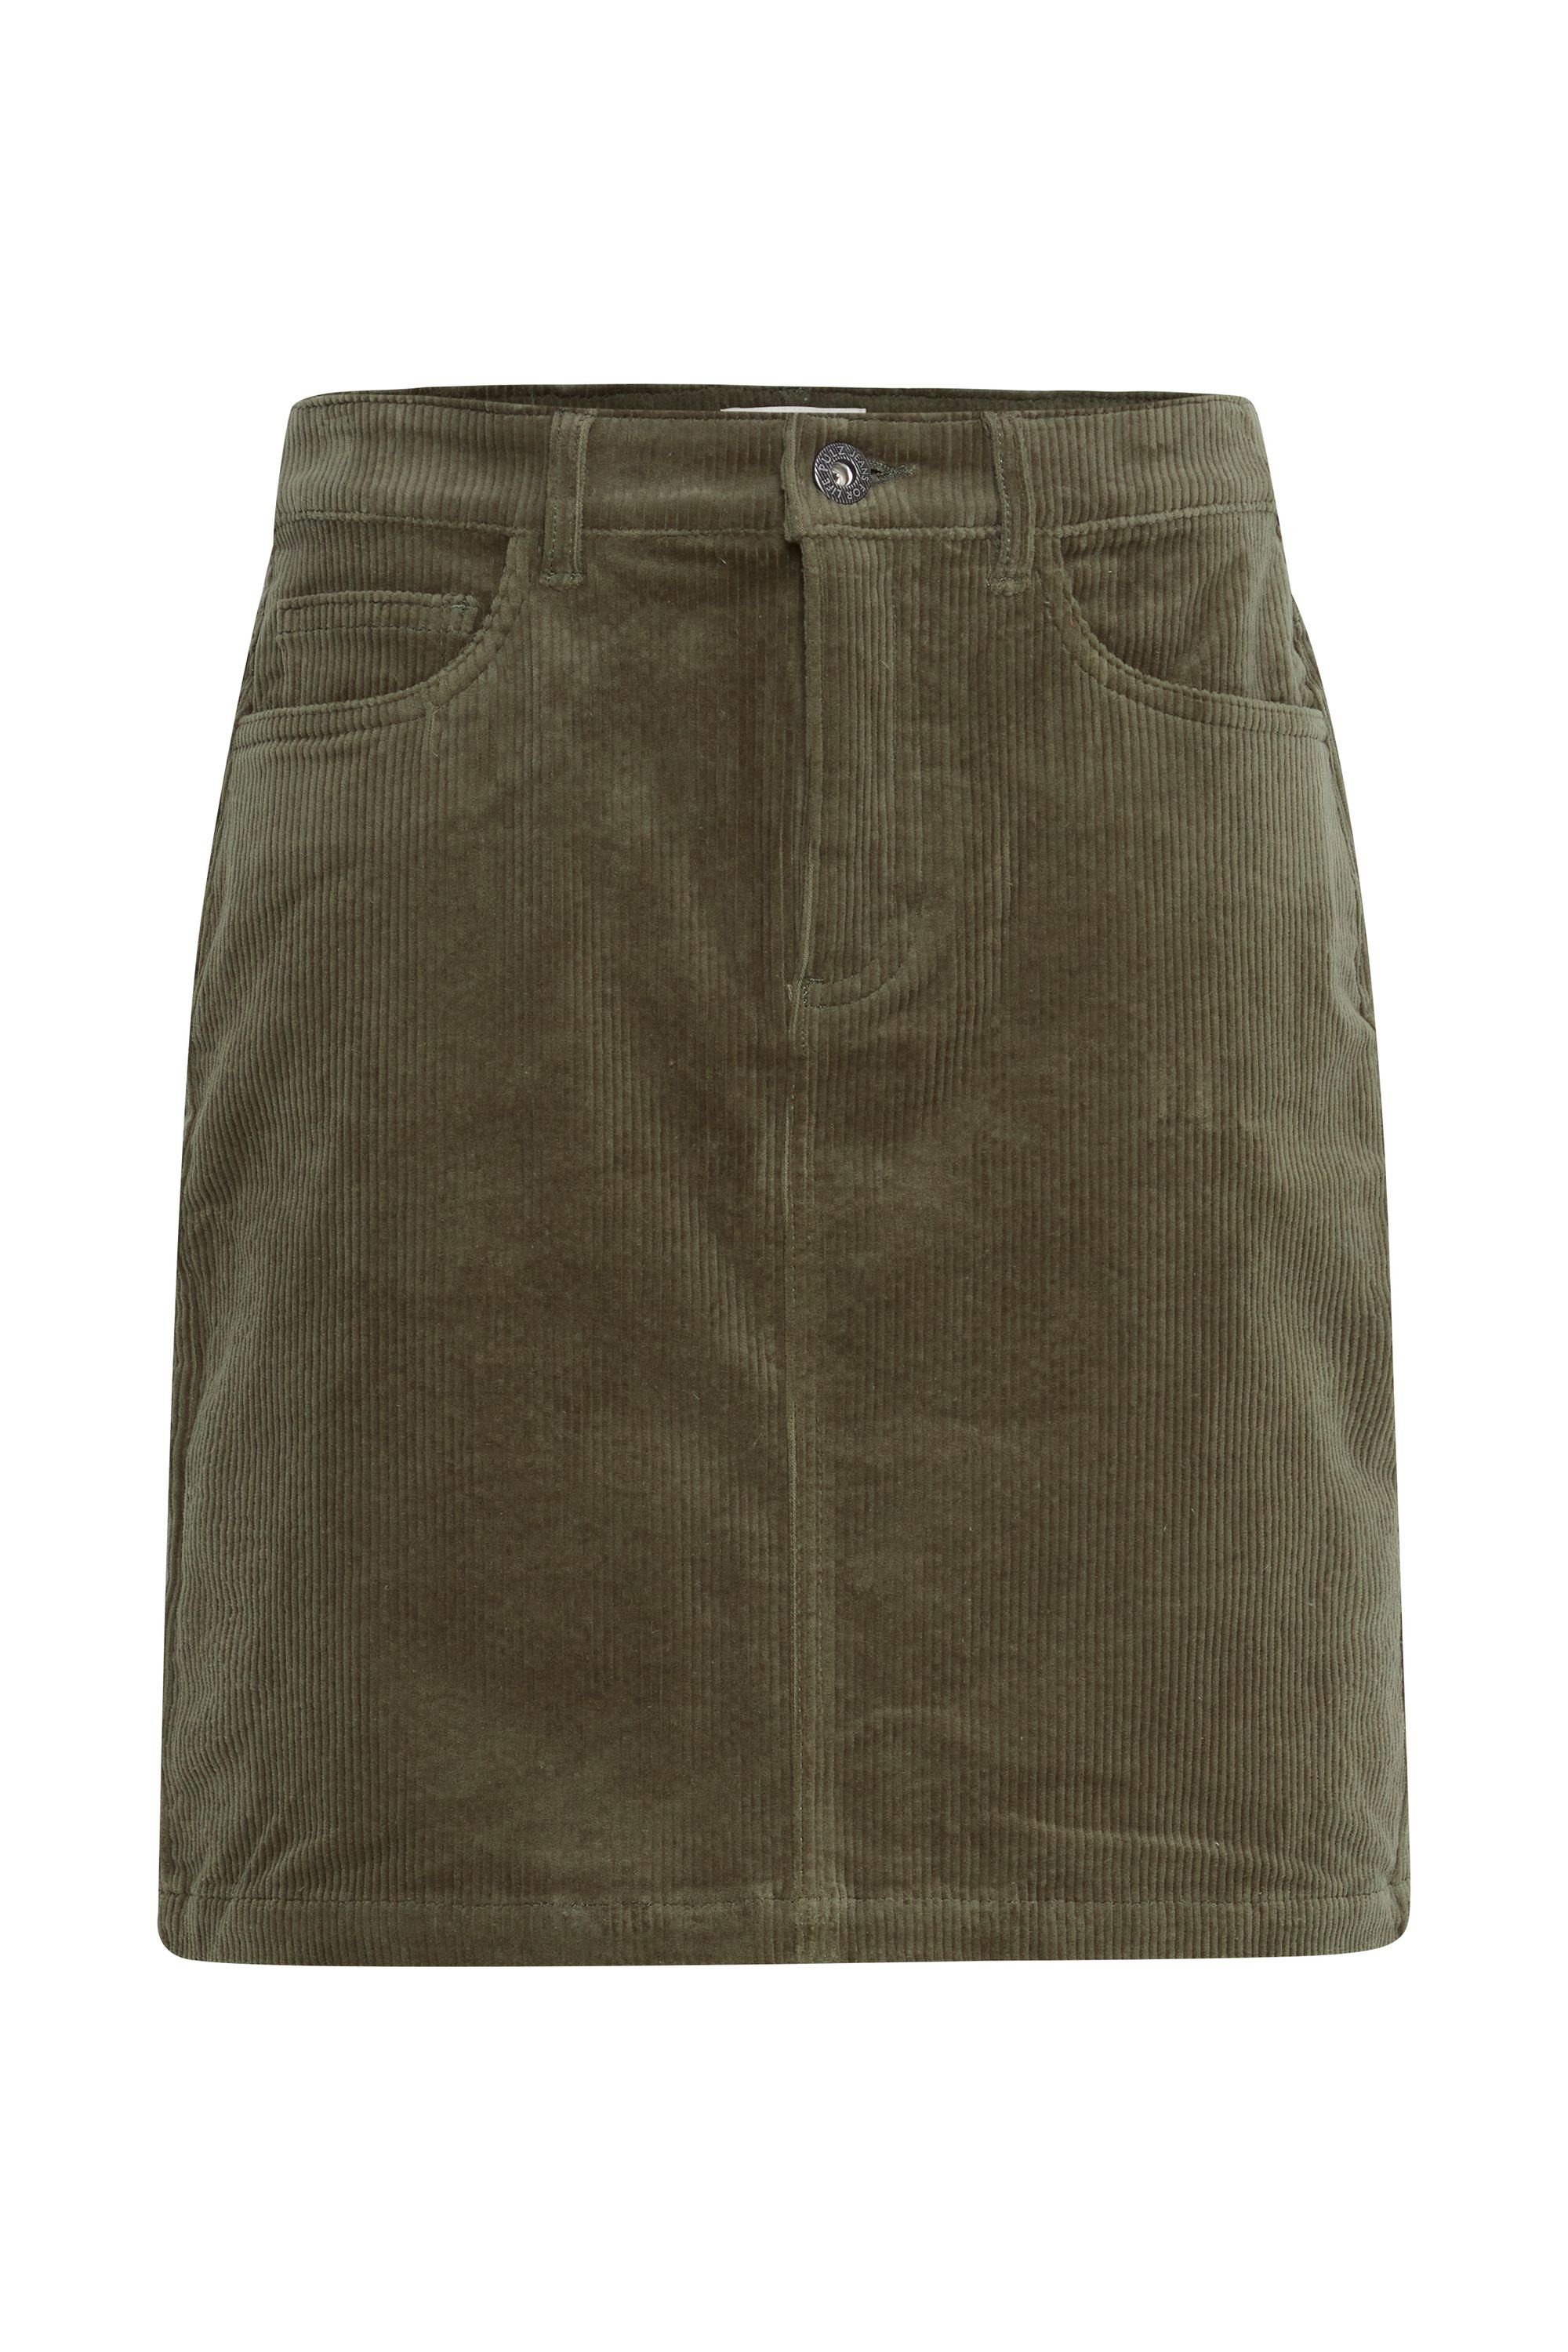 (190511) 50206972 Grape PZSALLY Pulz Leaf Skirt Cordrock Jeans